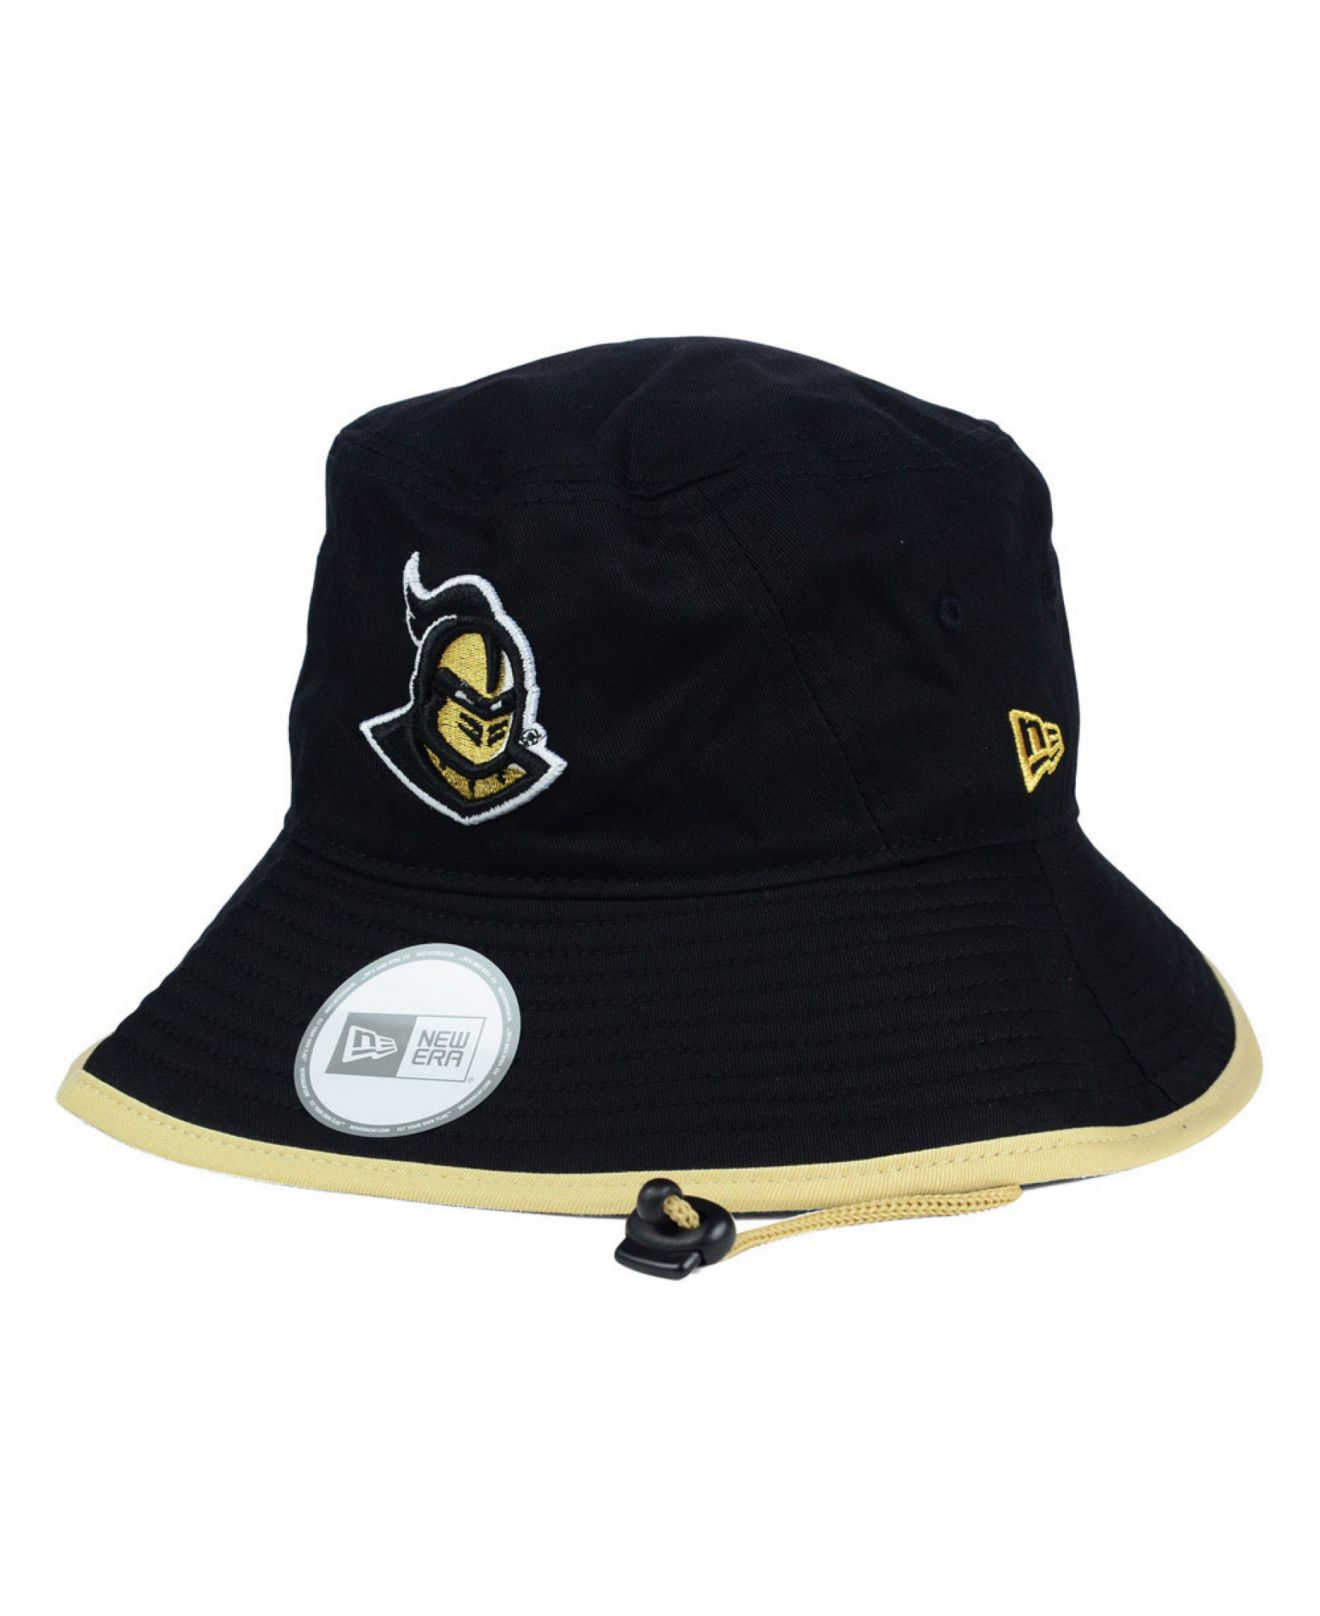 Lyst - Ktz Ucf Knights Tip Bucket Hat in Black for Men